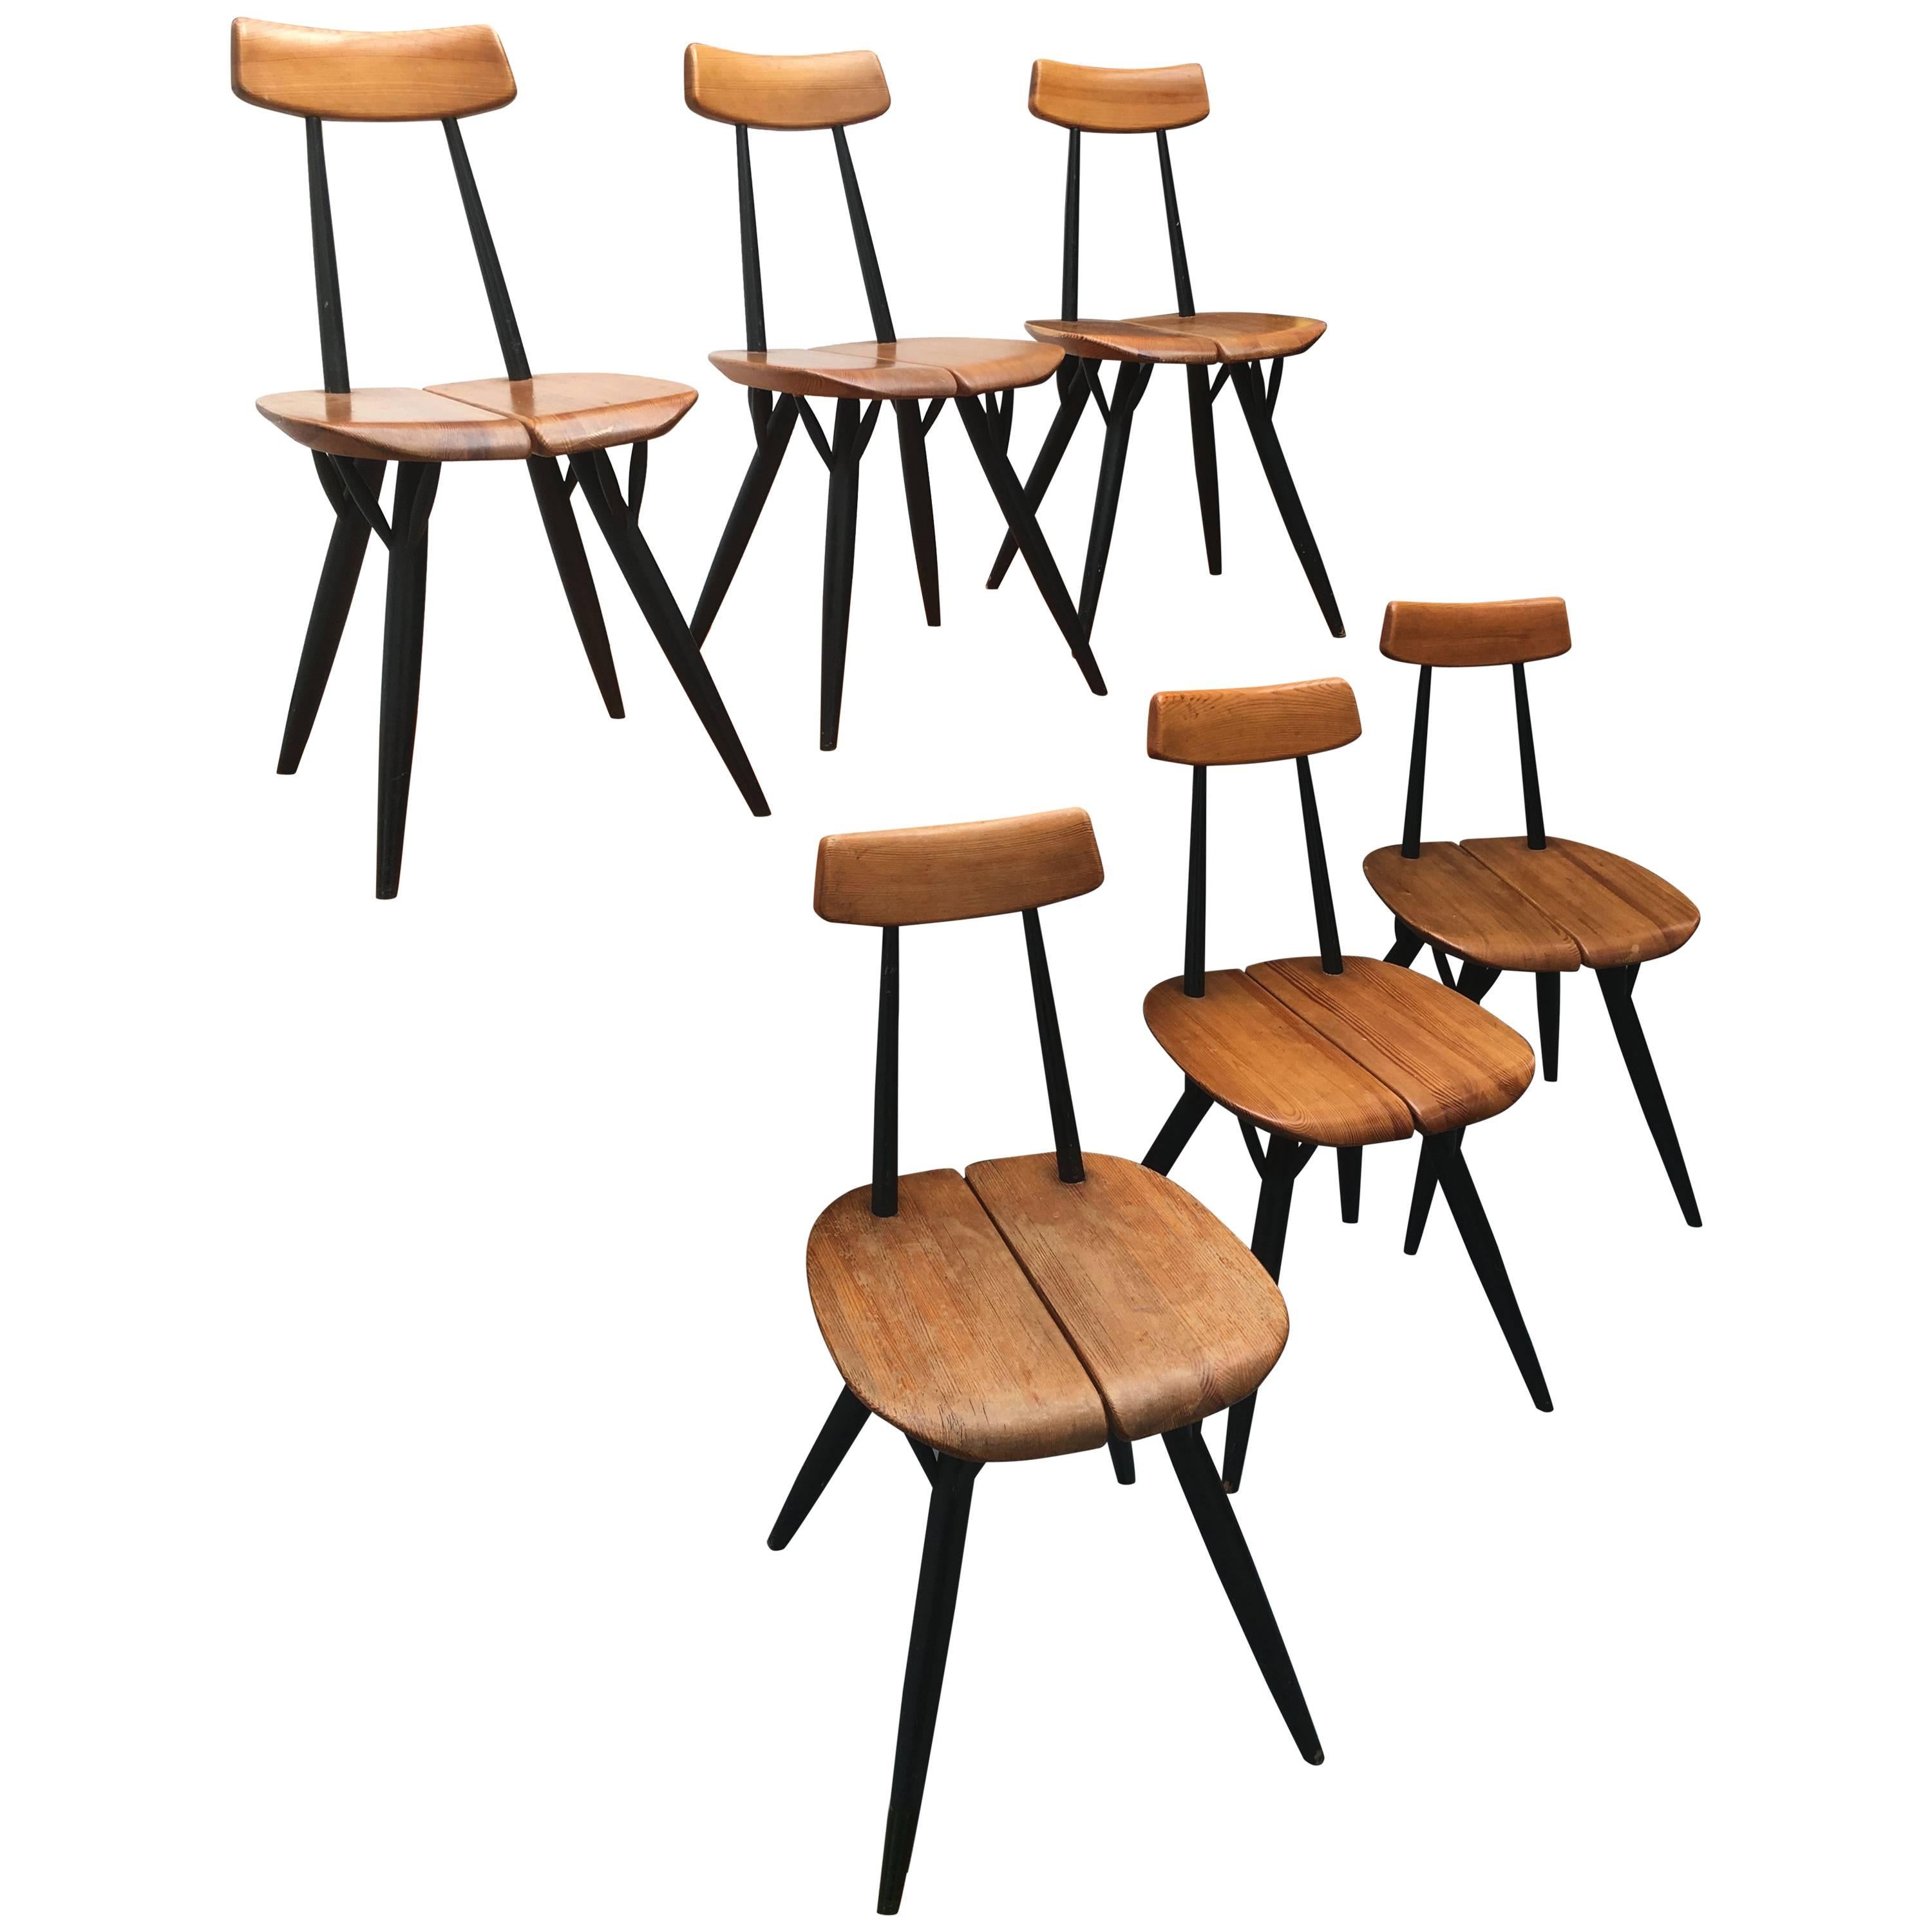 Six Pirkka Chairs by Ilmari Tapiovaara for Asko, Finnish, circa 1955 For Sale